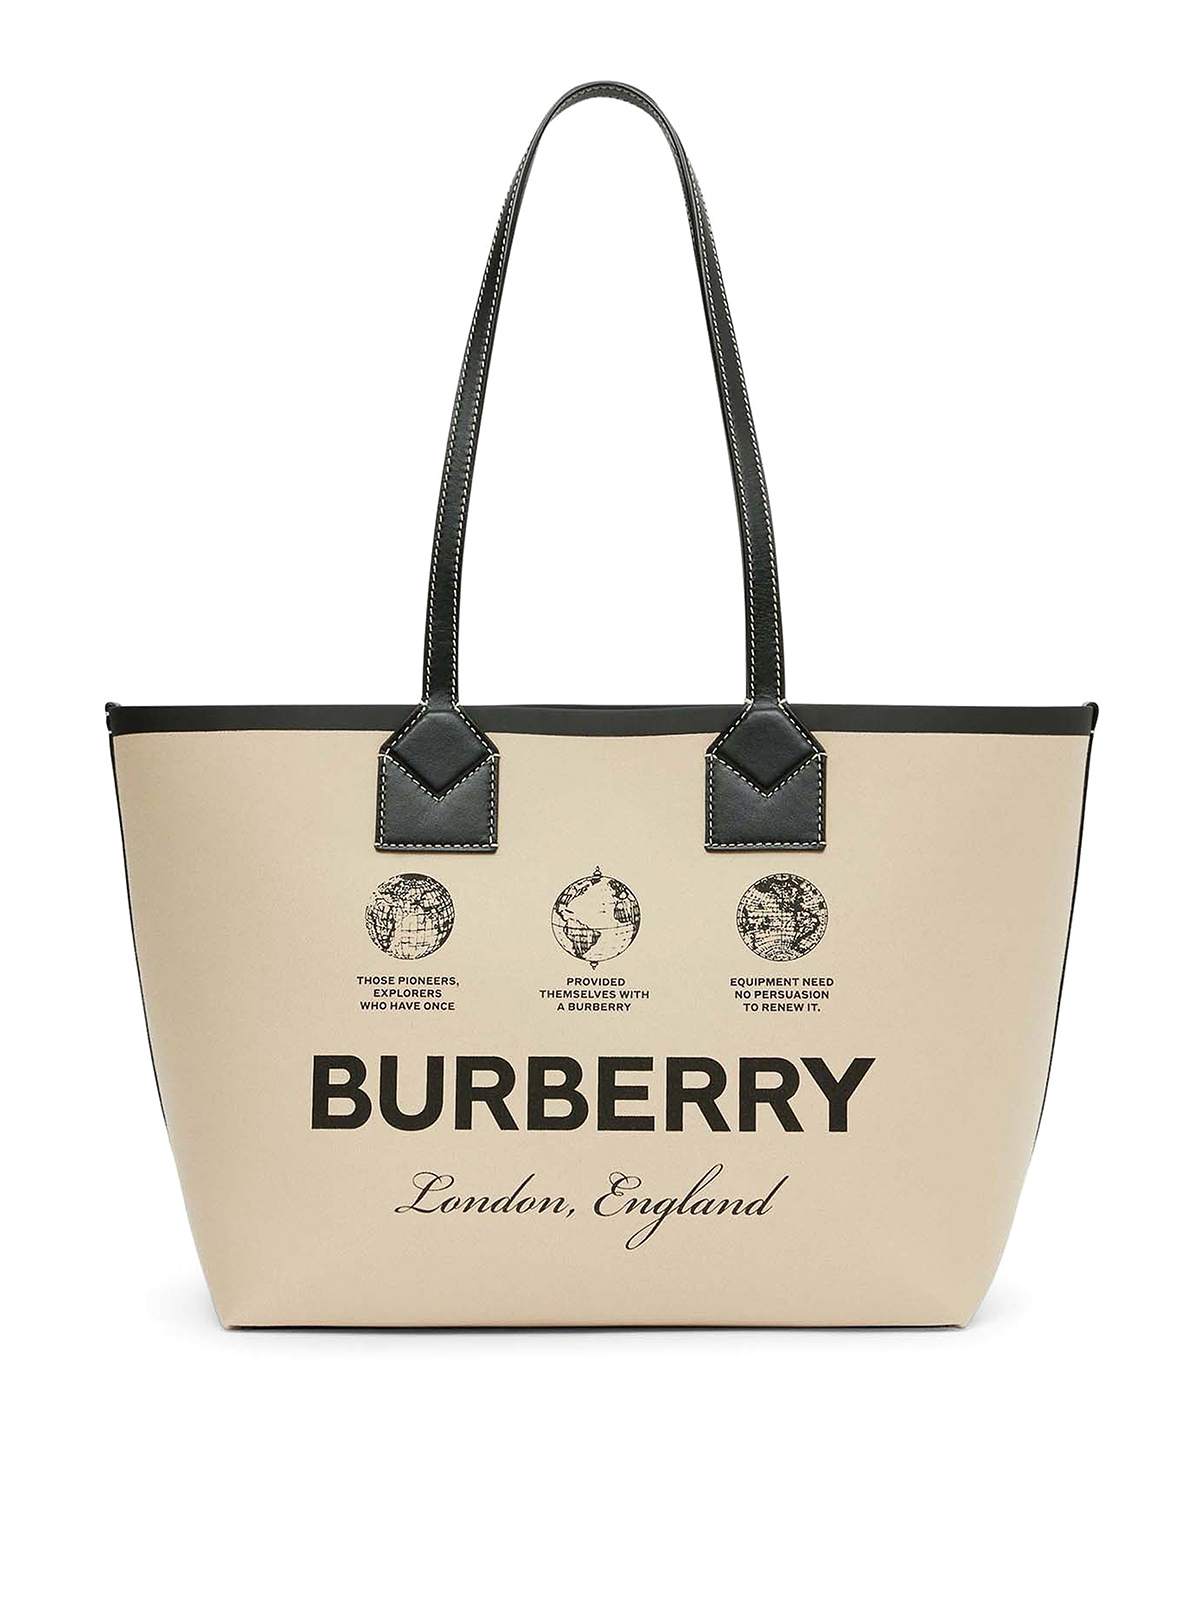 Burberry bags for sale in Arlington, Texas | Facebook Marketplace | Facebook